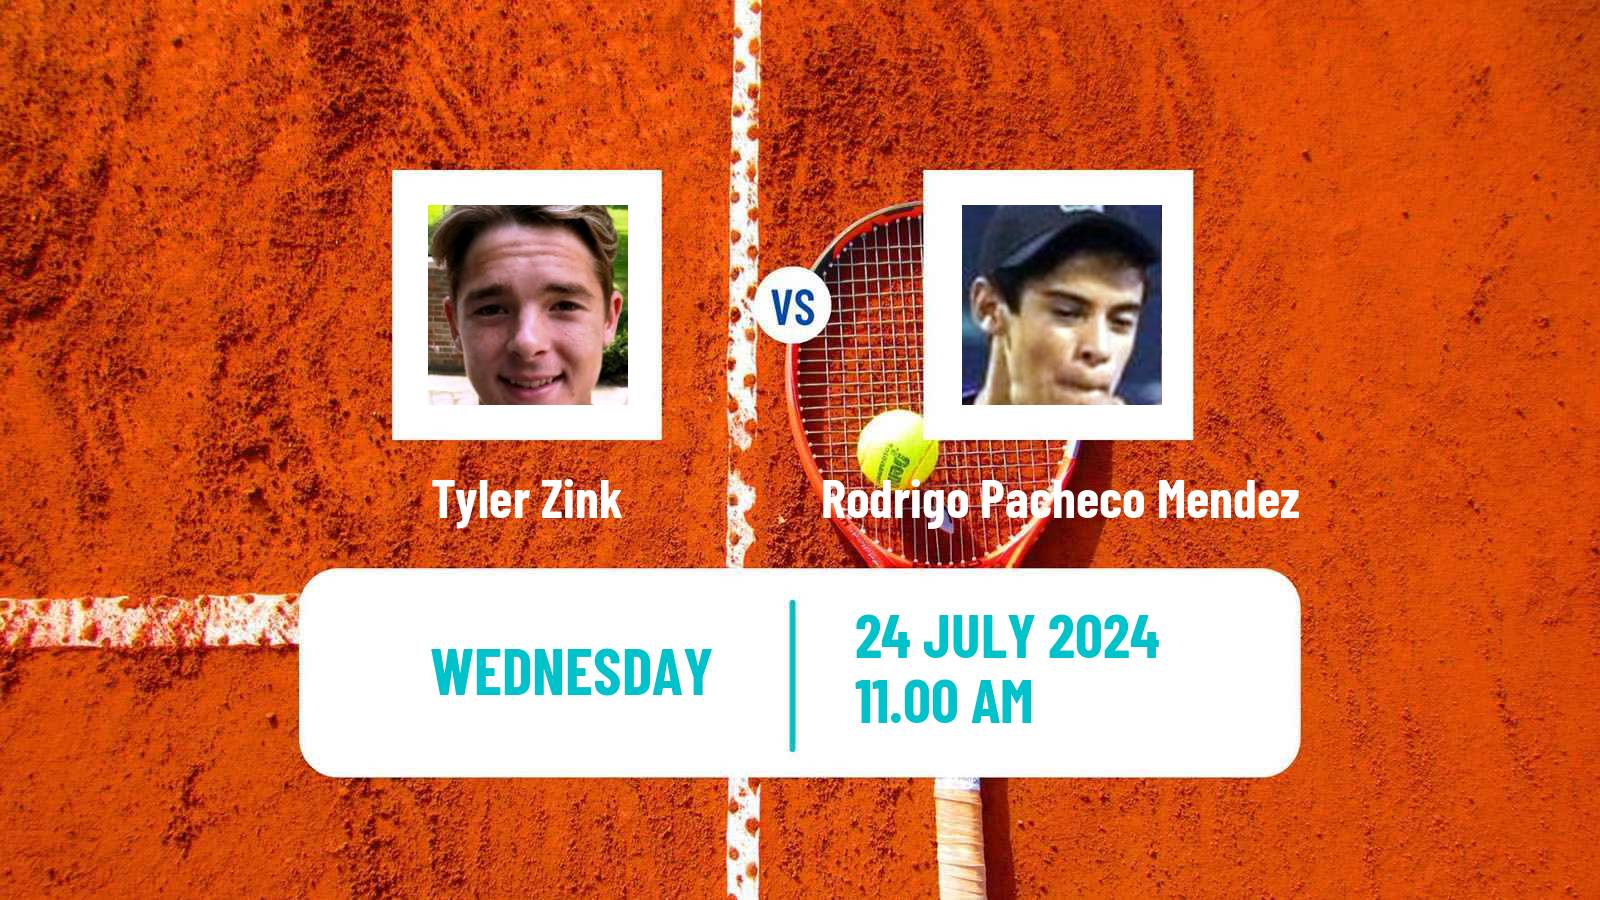 Tennis ITF M25 Champaign Il Men Tyler Zink - Rodrigo Pacheco Mendez